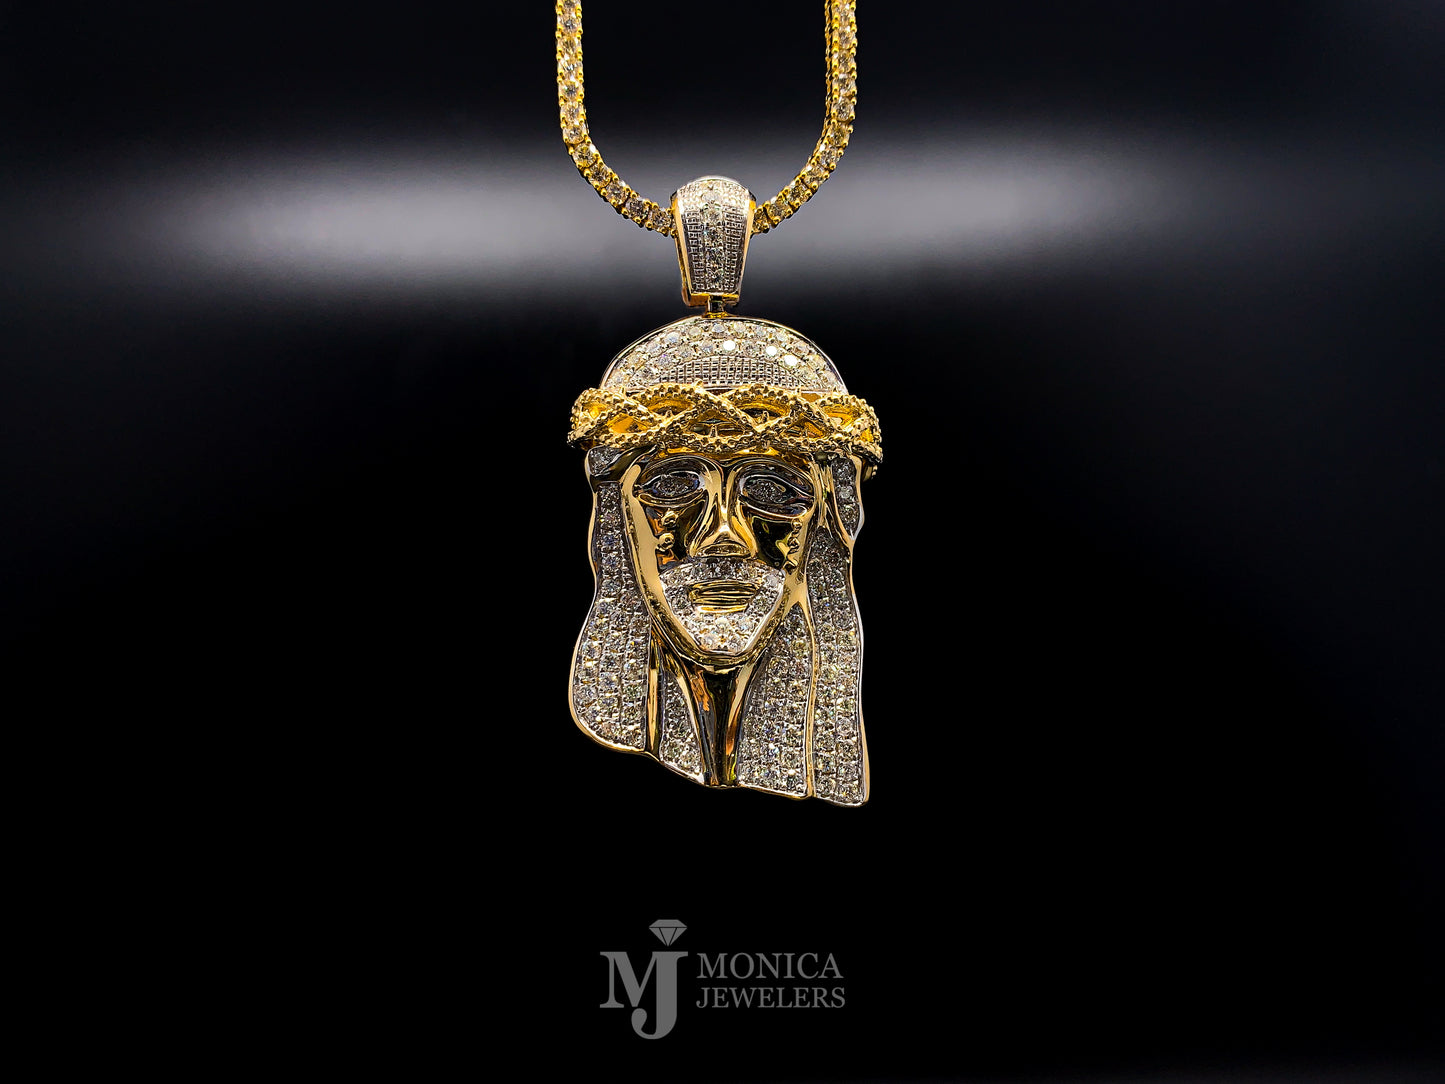 10k Gold and diamond Jesus pendant 2.15ctw with chain